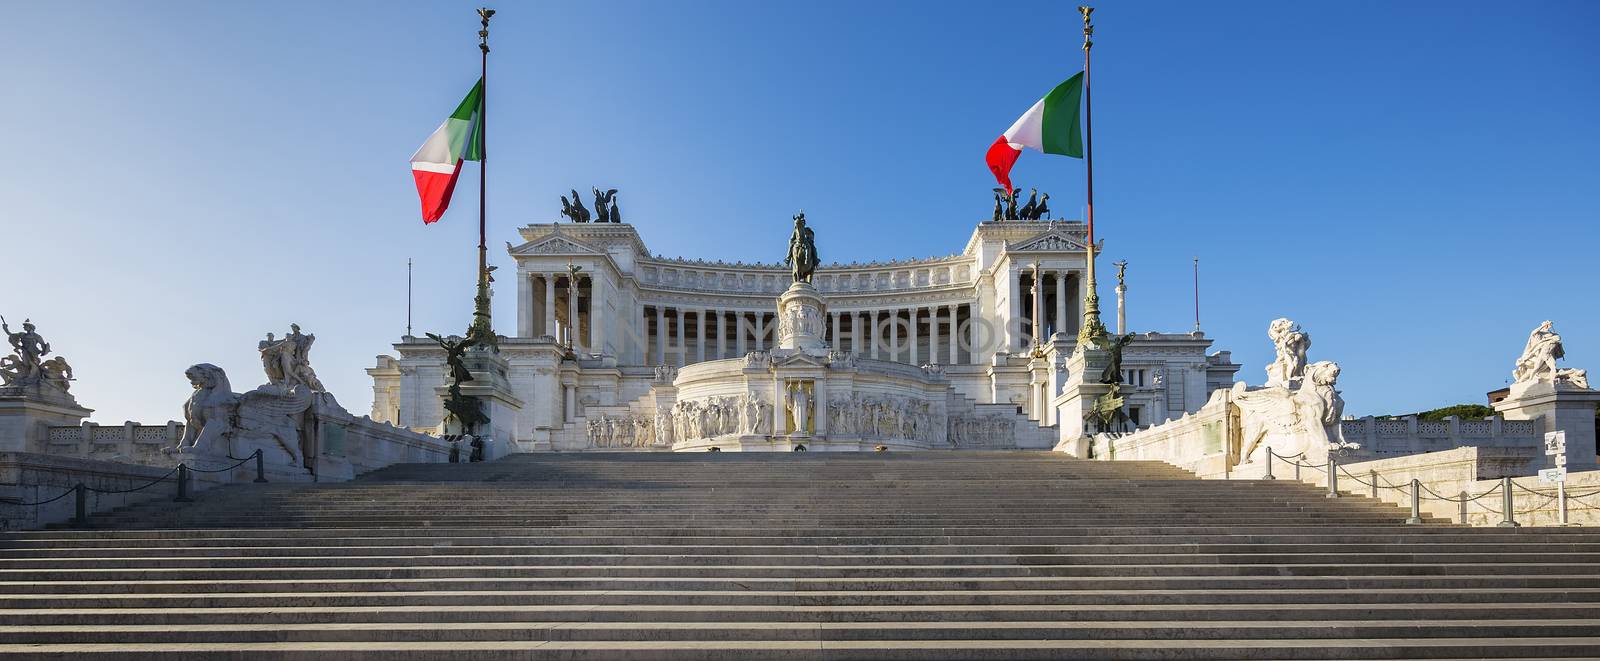 Monument Vittorio Emanuele II by vwalakte